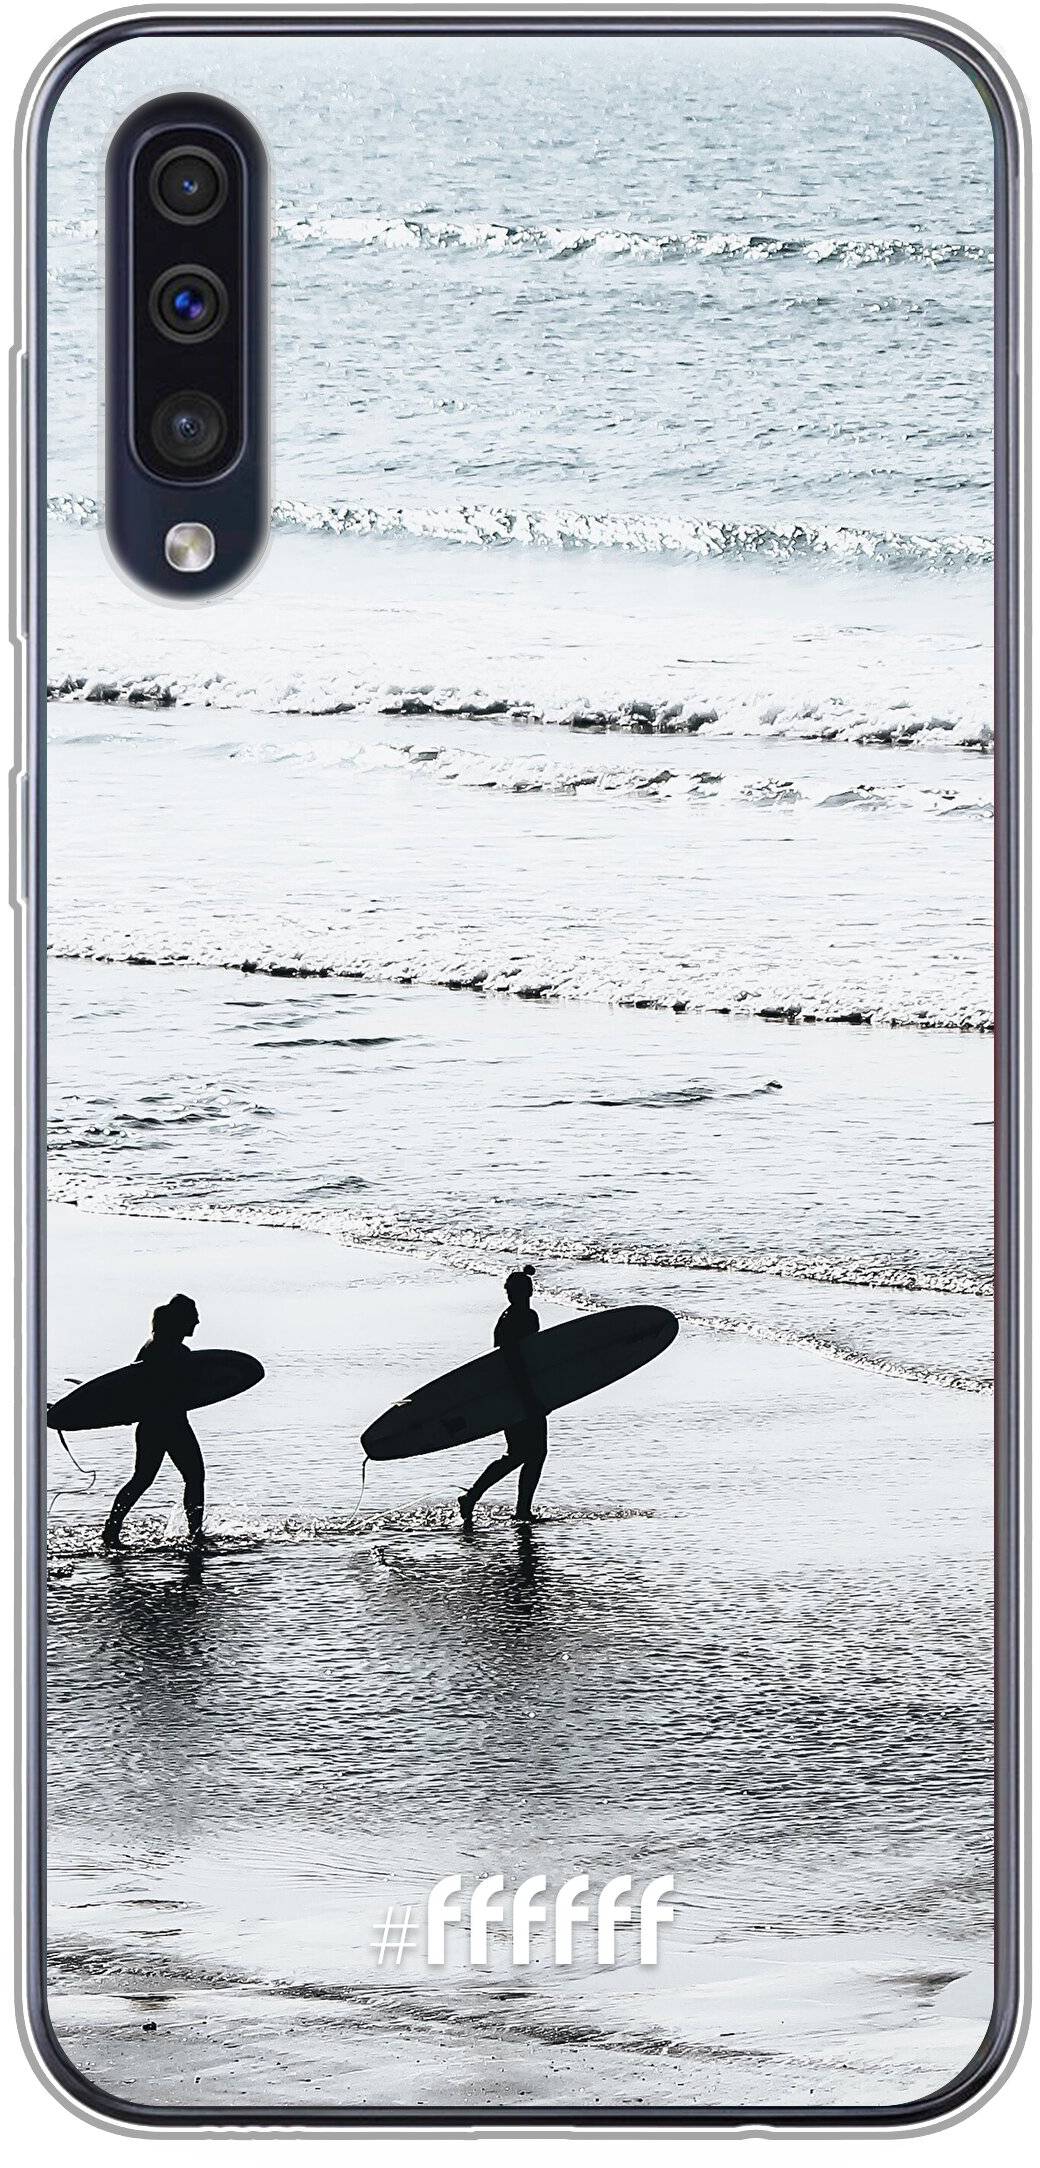 Surfing Galaxy A50s